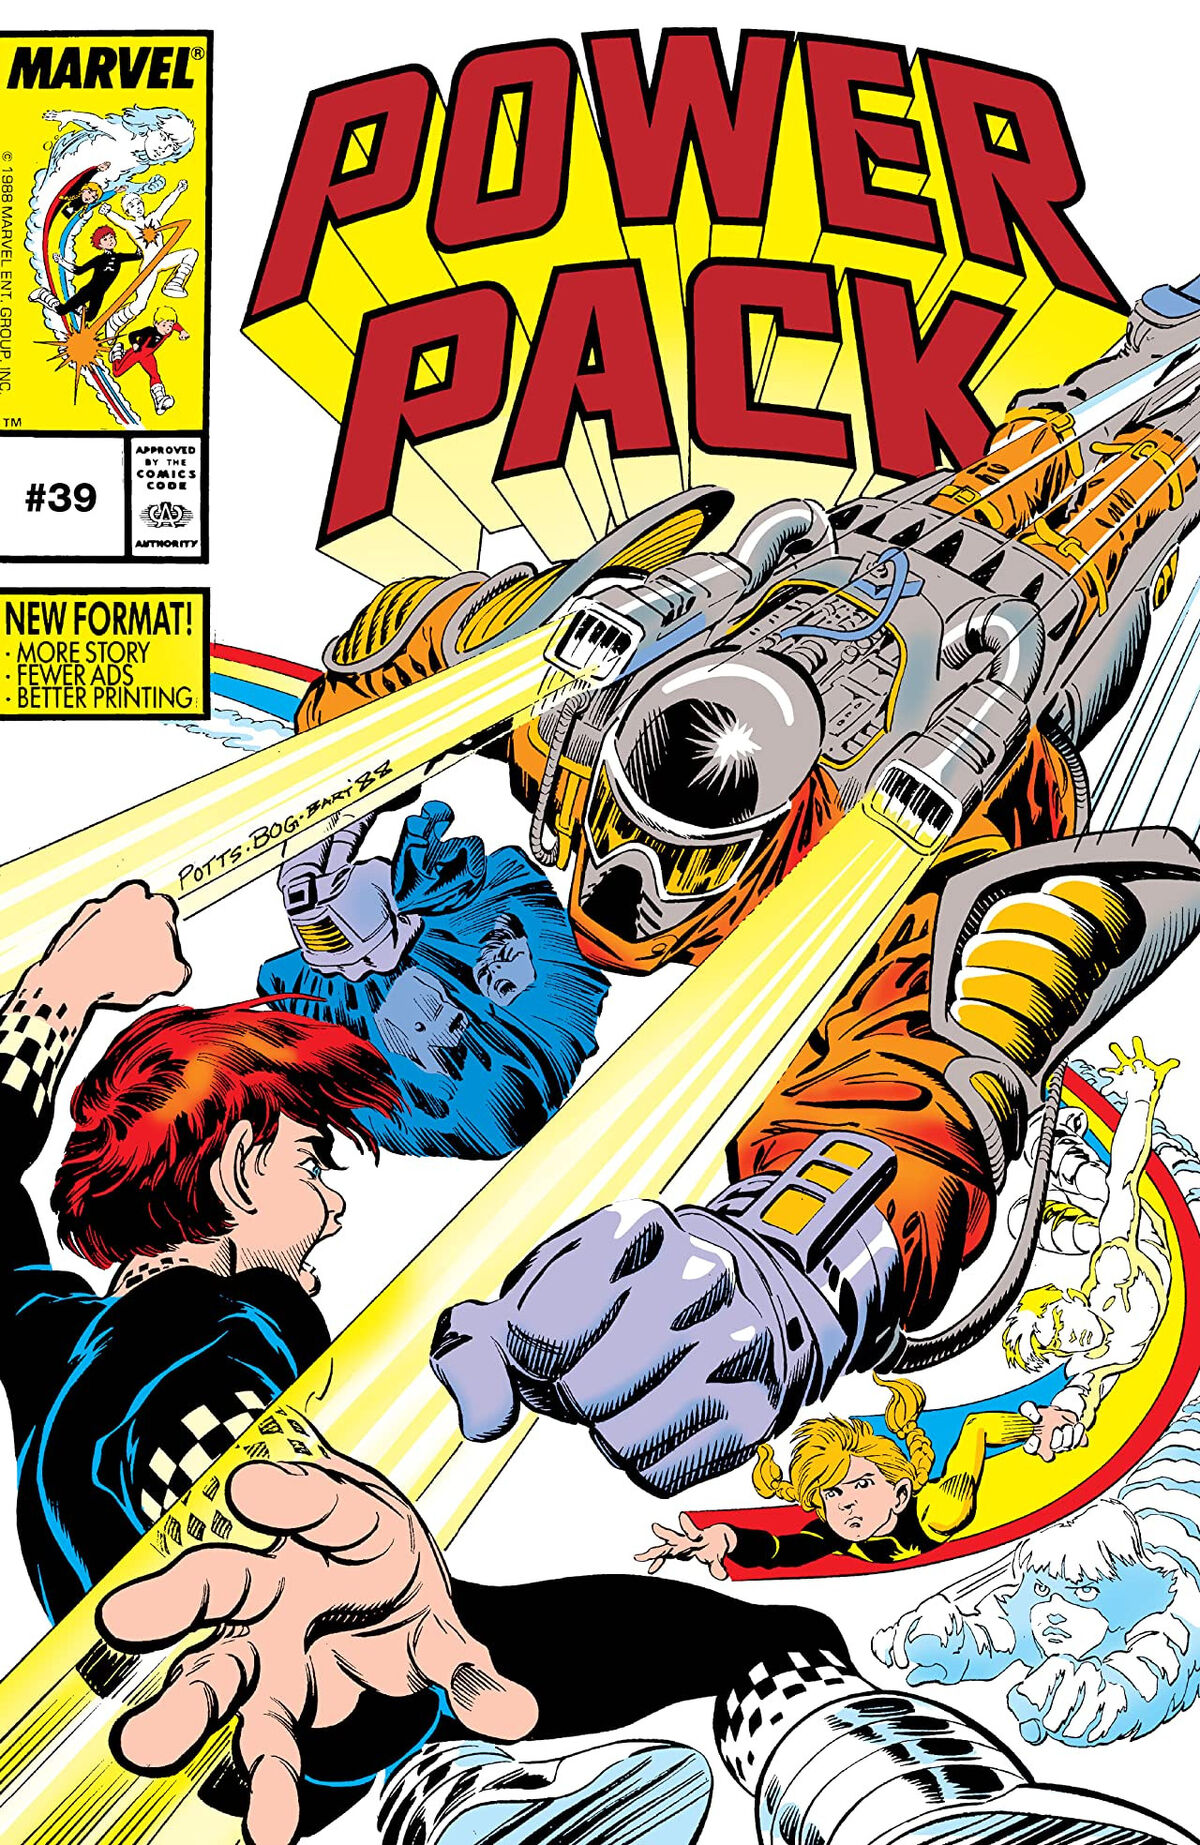 Power packing комиксы. Комикс 1984 читать. Комикс пак программа. Power Pack Marvel Vintage.